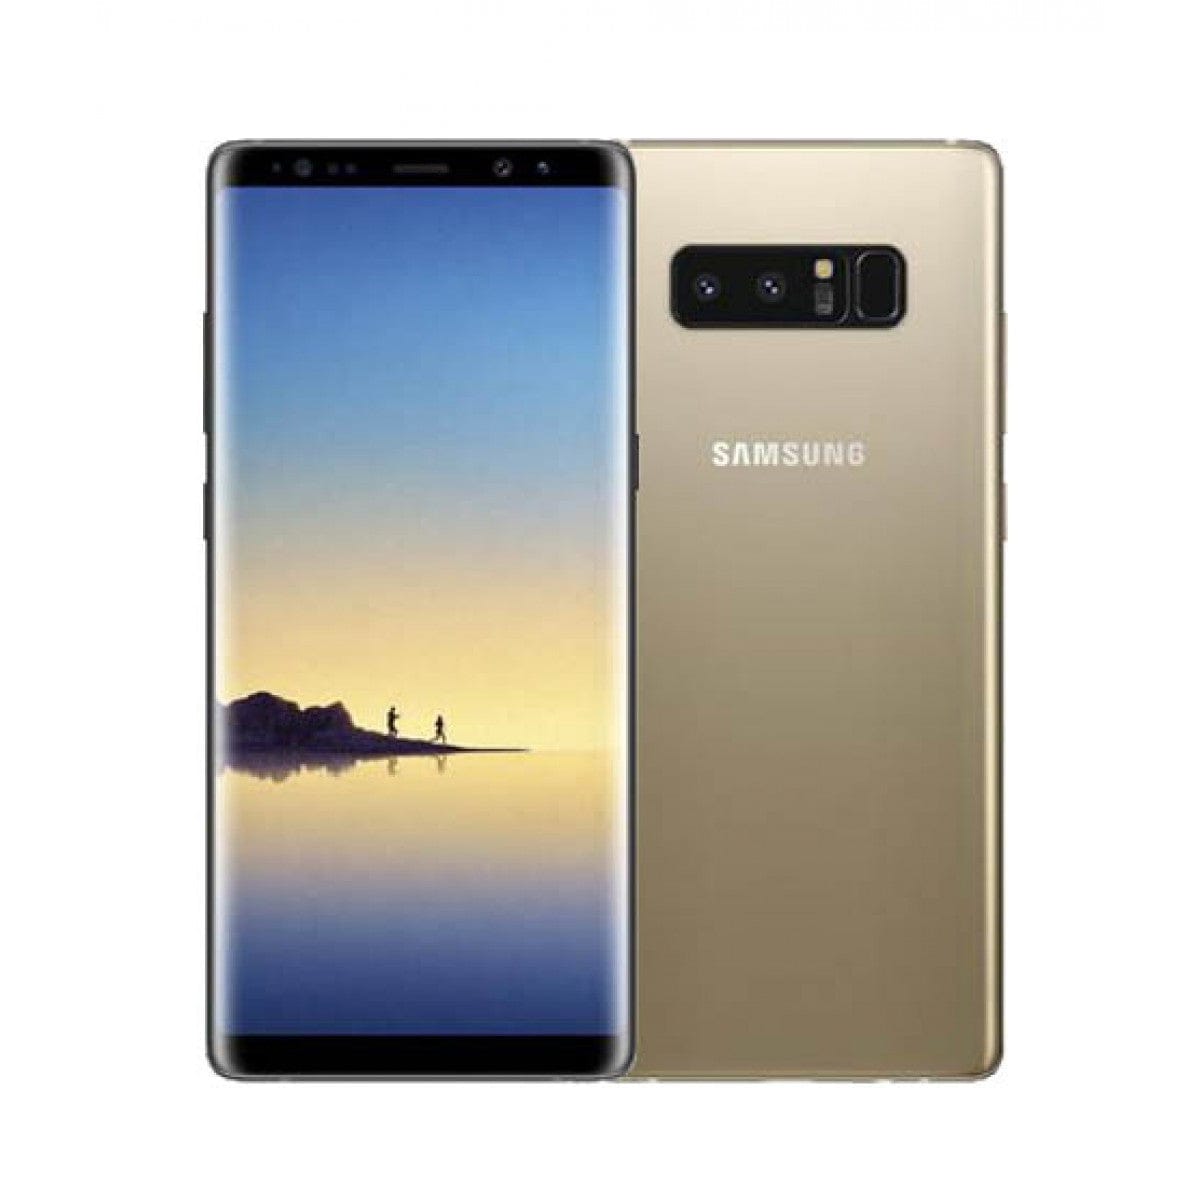 Samsung Galaxy Note8 - Dual-SIM - 64 GB - Maple Gold - Unlocked